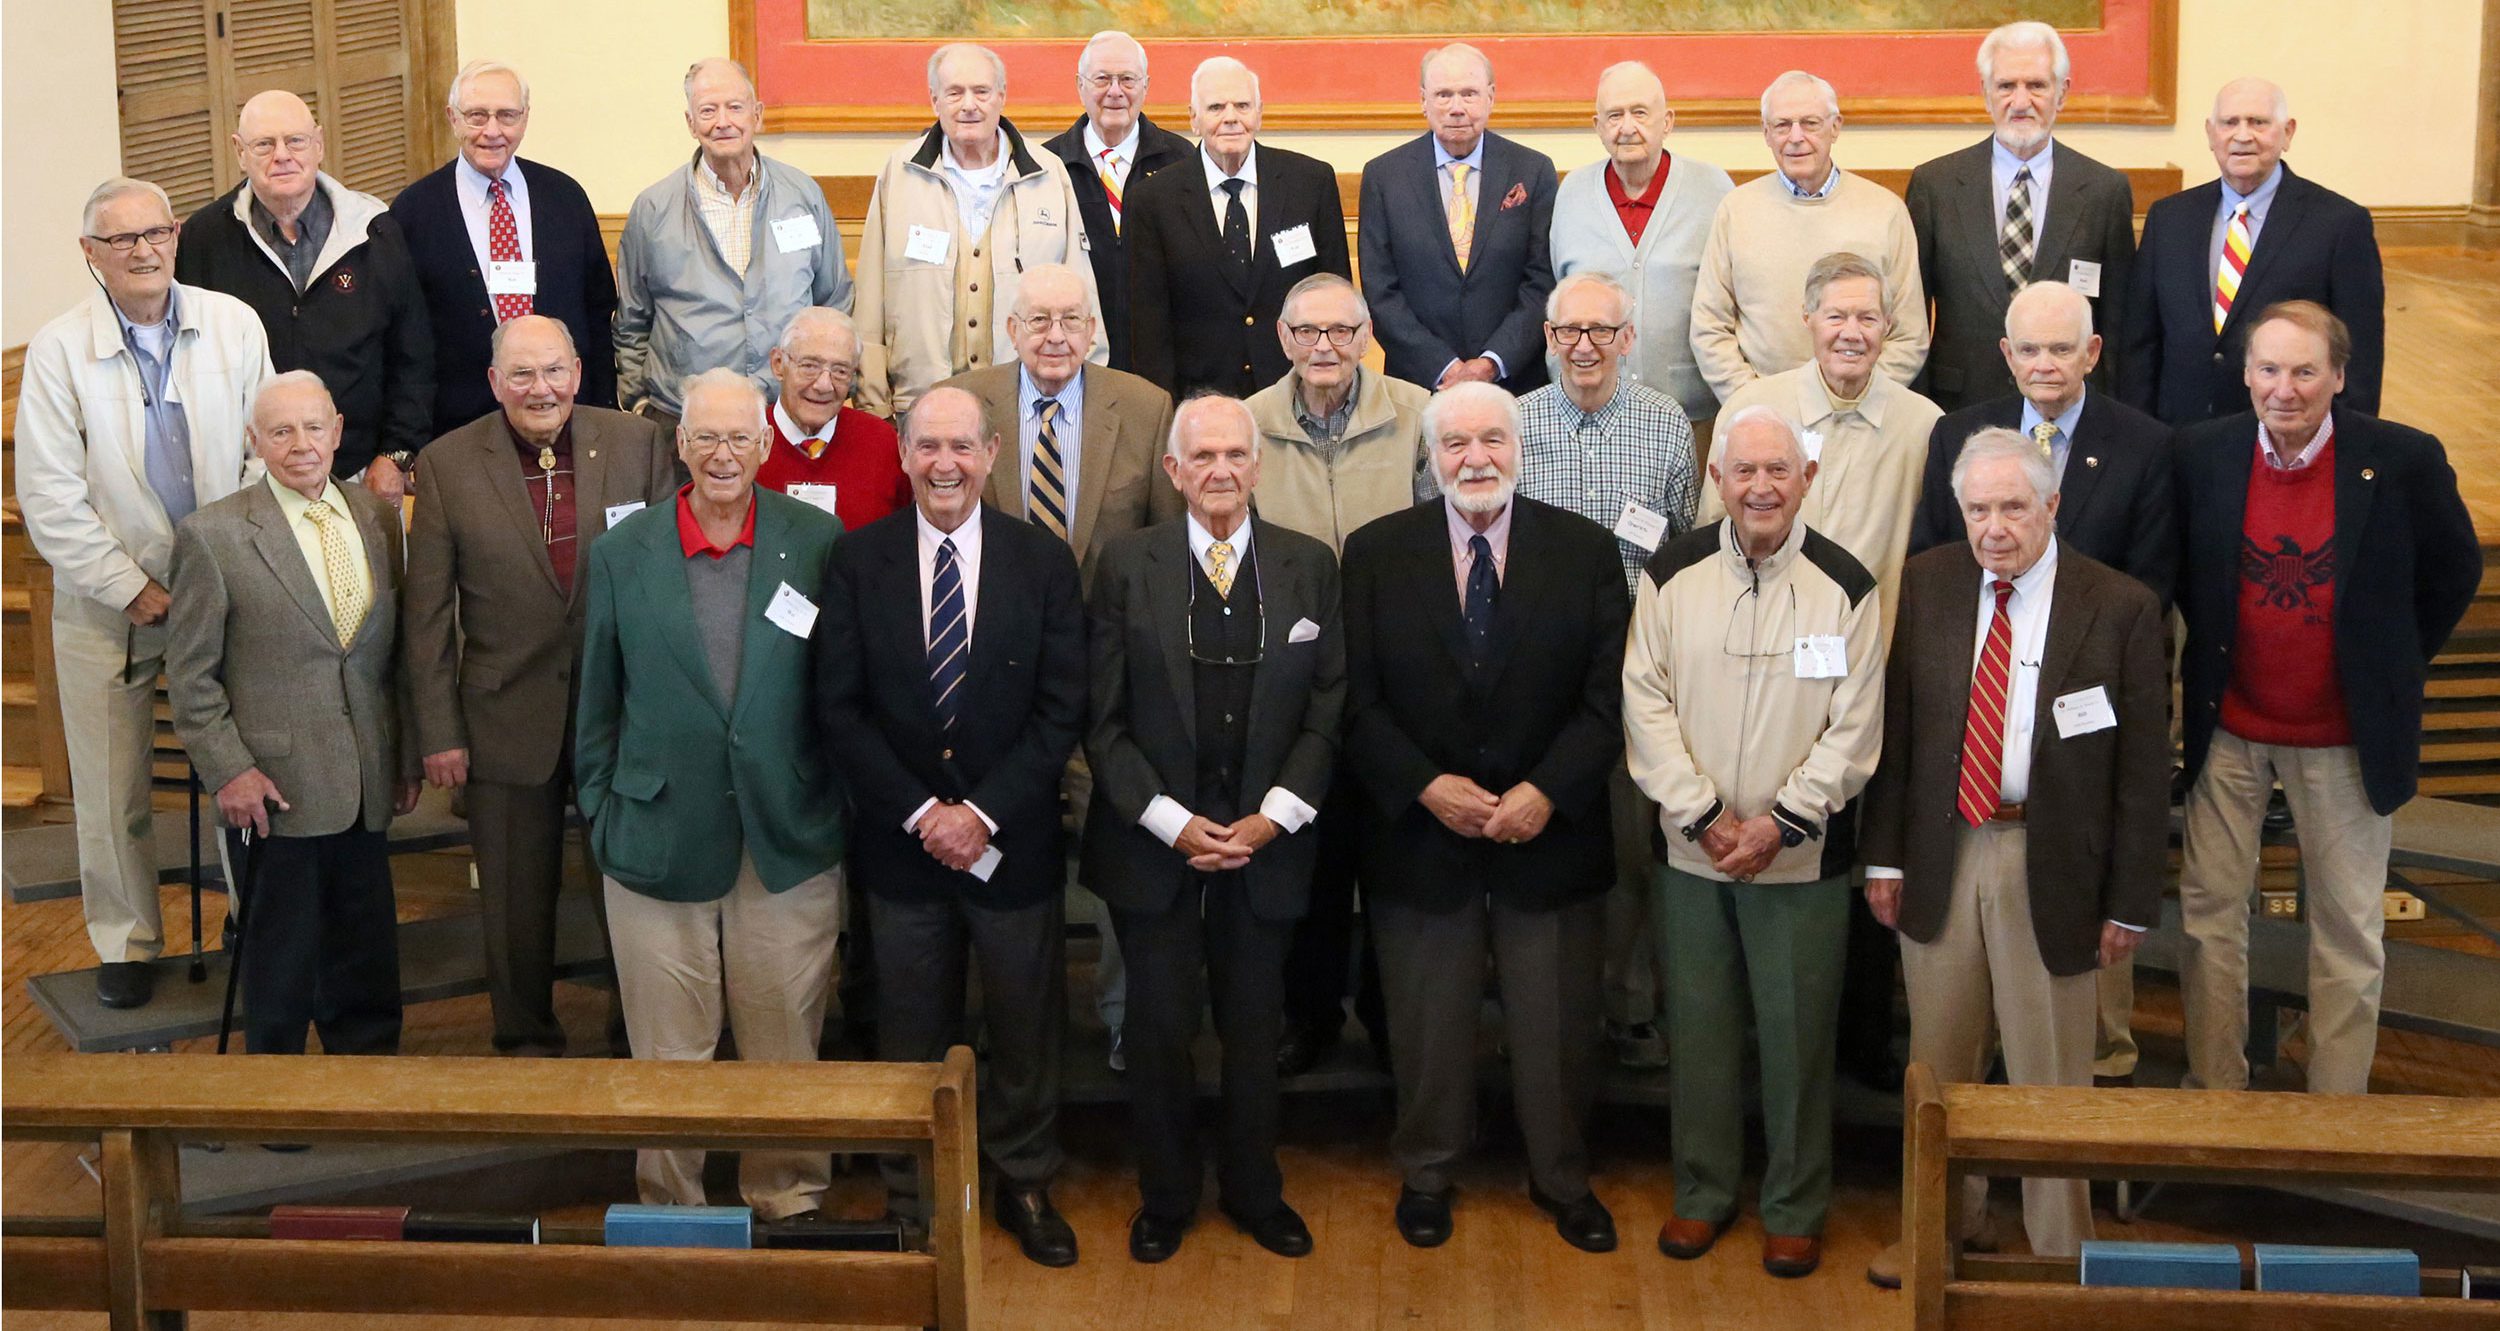 Class of 1953 – 70th Reunion